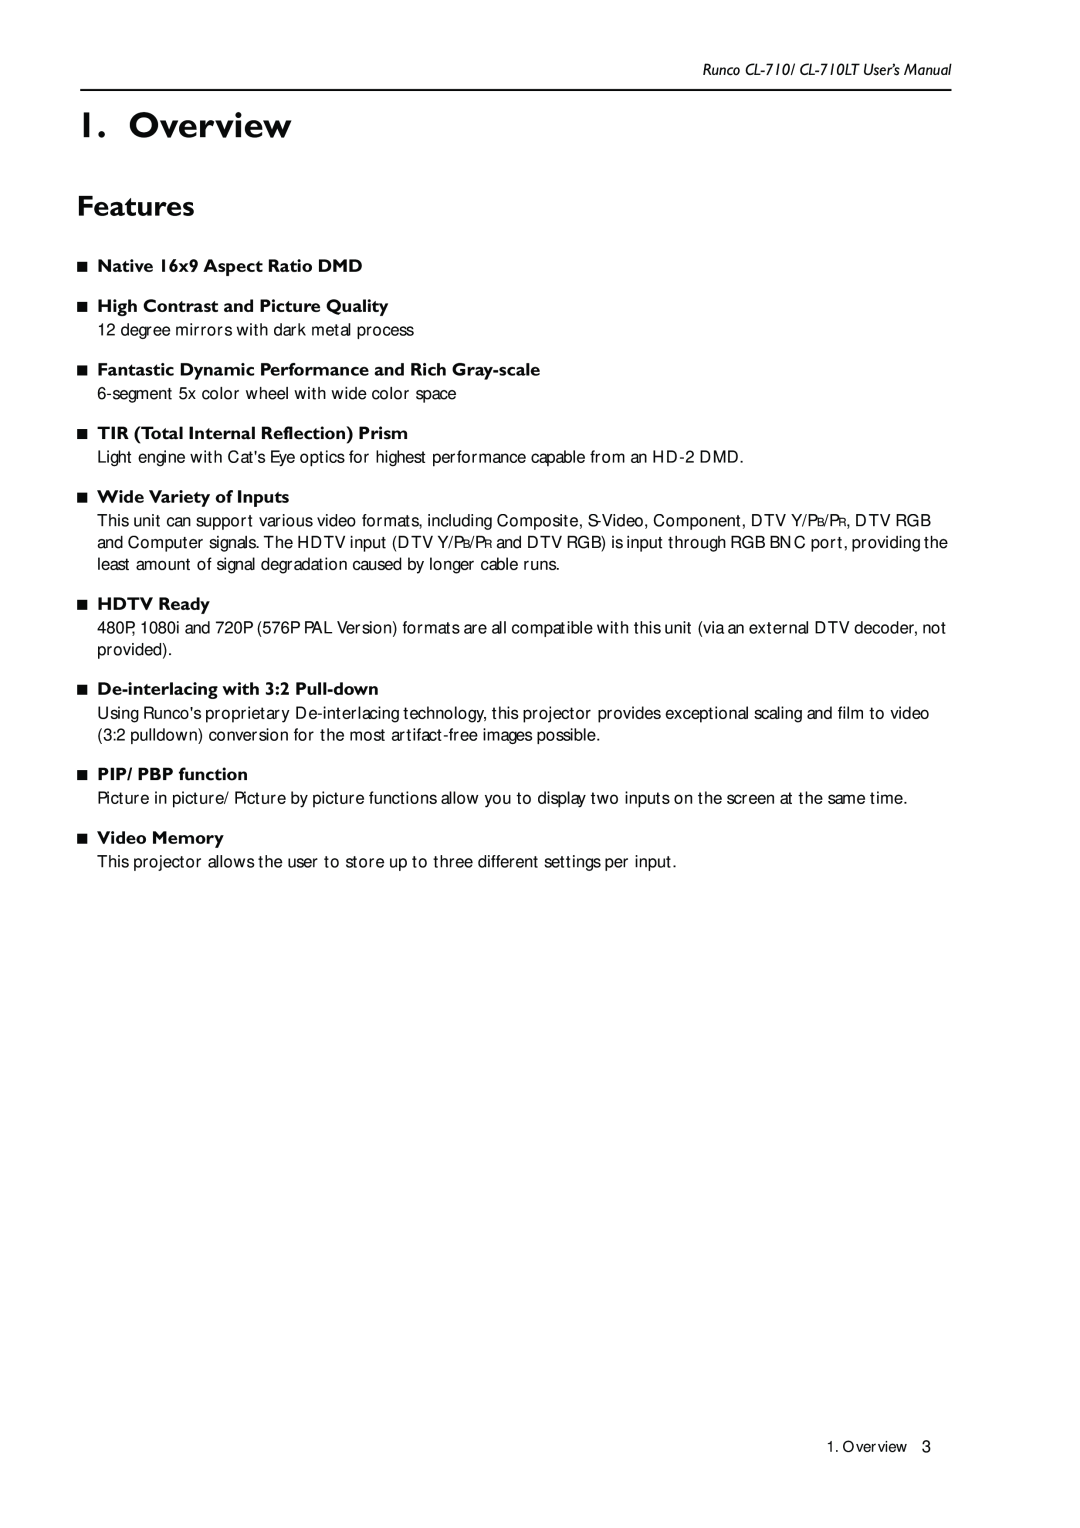 Runco CL-710LT manual Overview, Features 